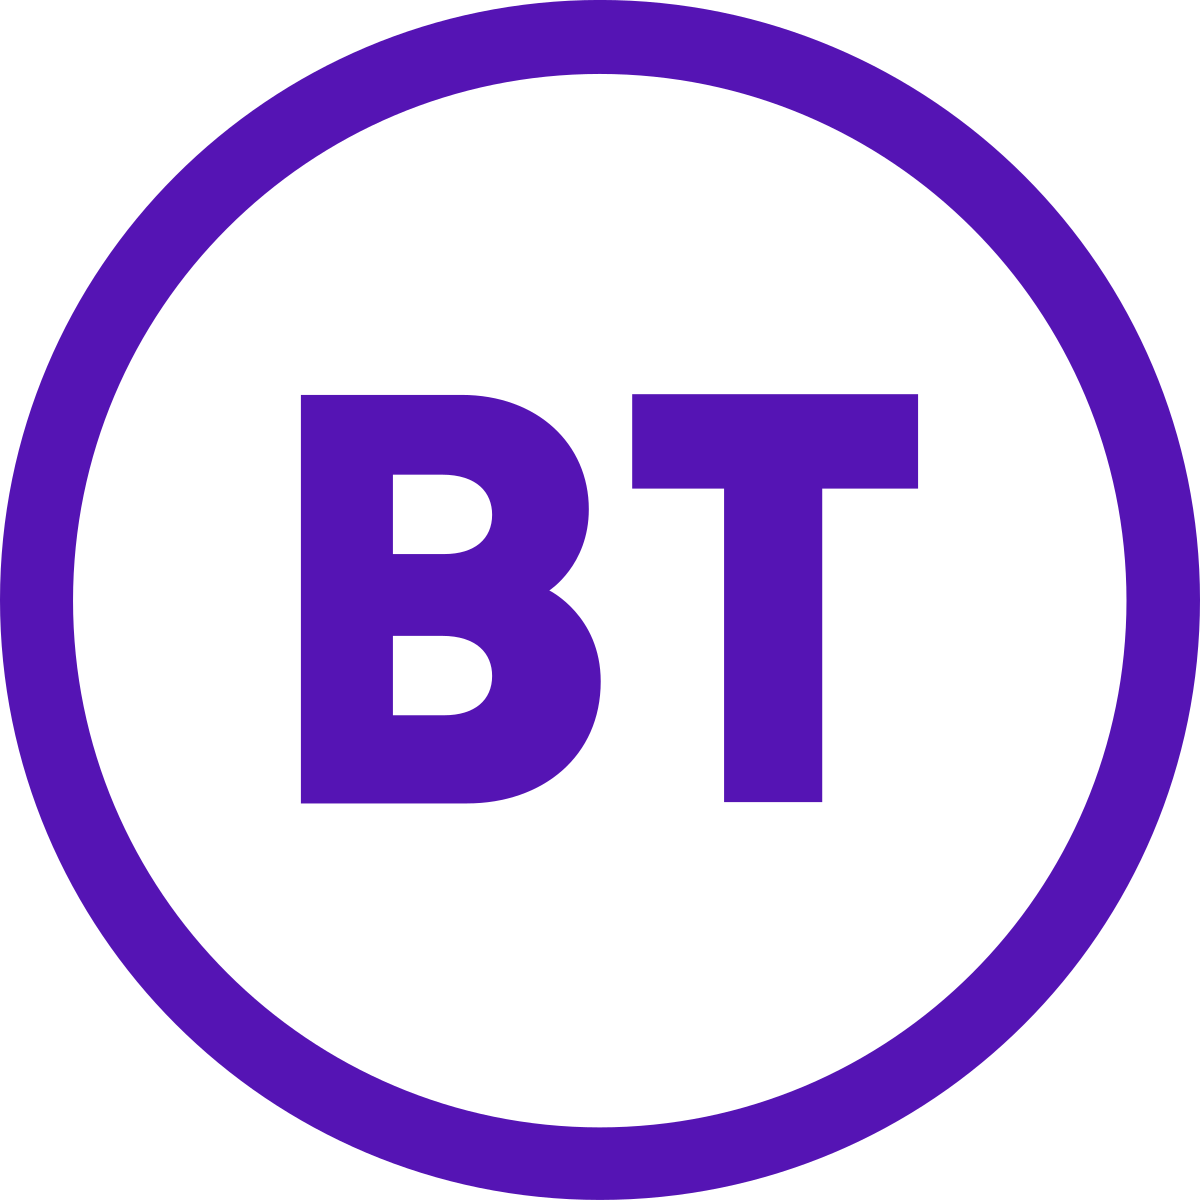 BT_logo_2019.svg